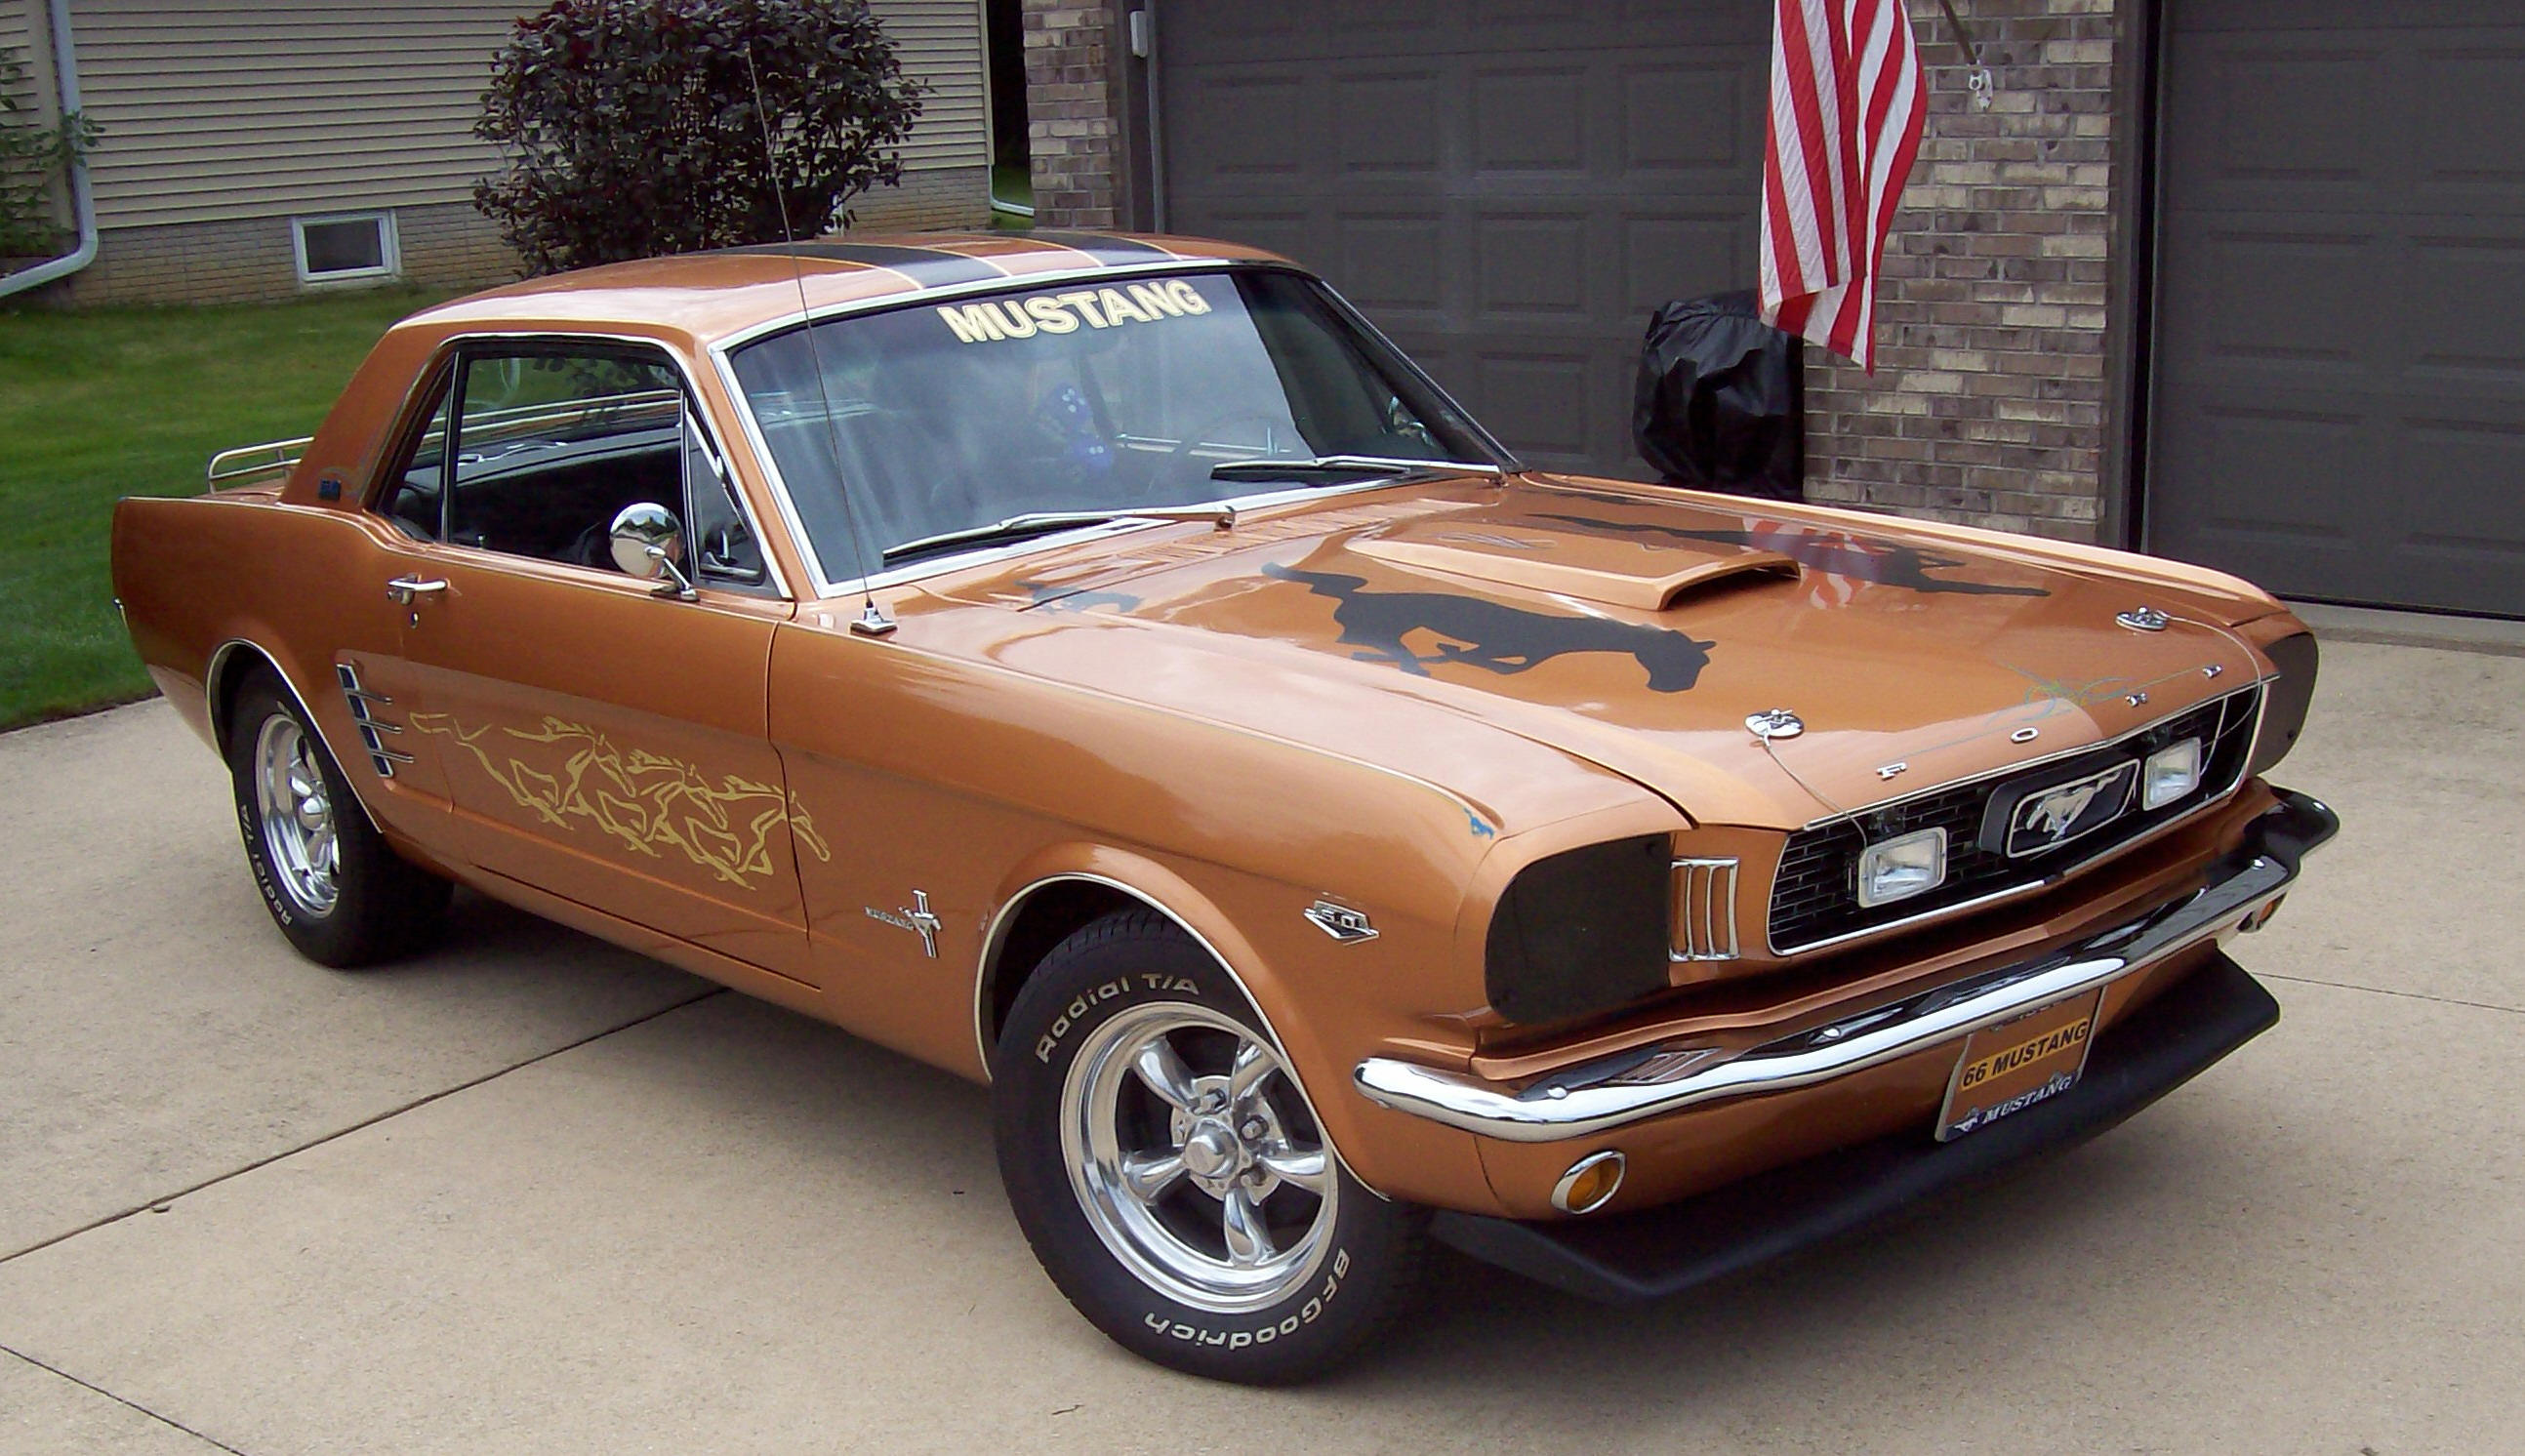 Joel Leonardson's 1966 Mustang Coupe